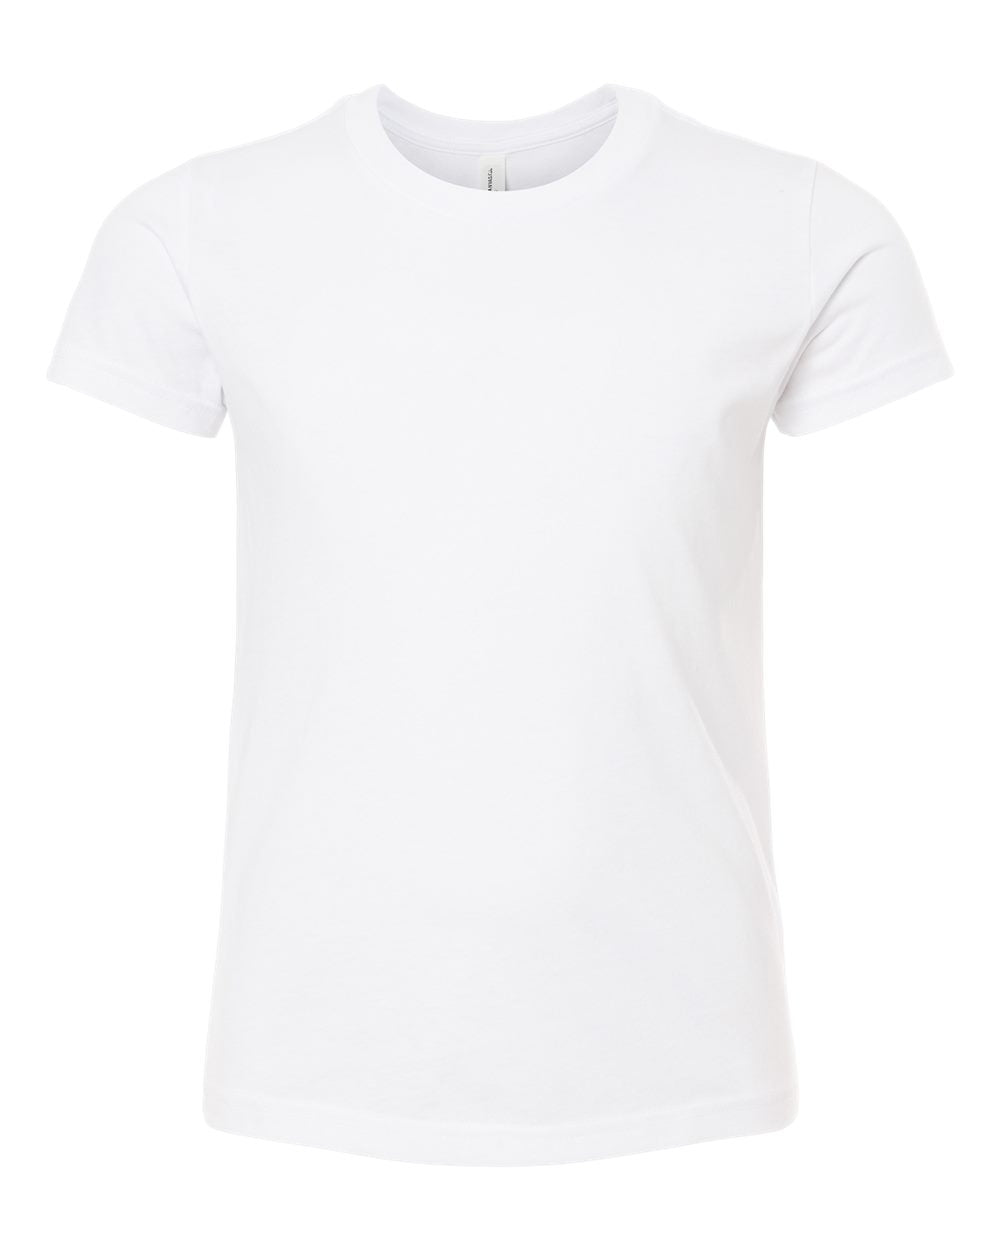 Custom Lake - Youth Jersey Tee Shirt - White